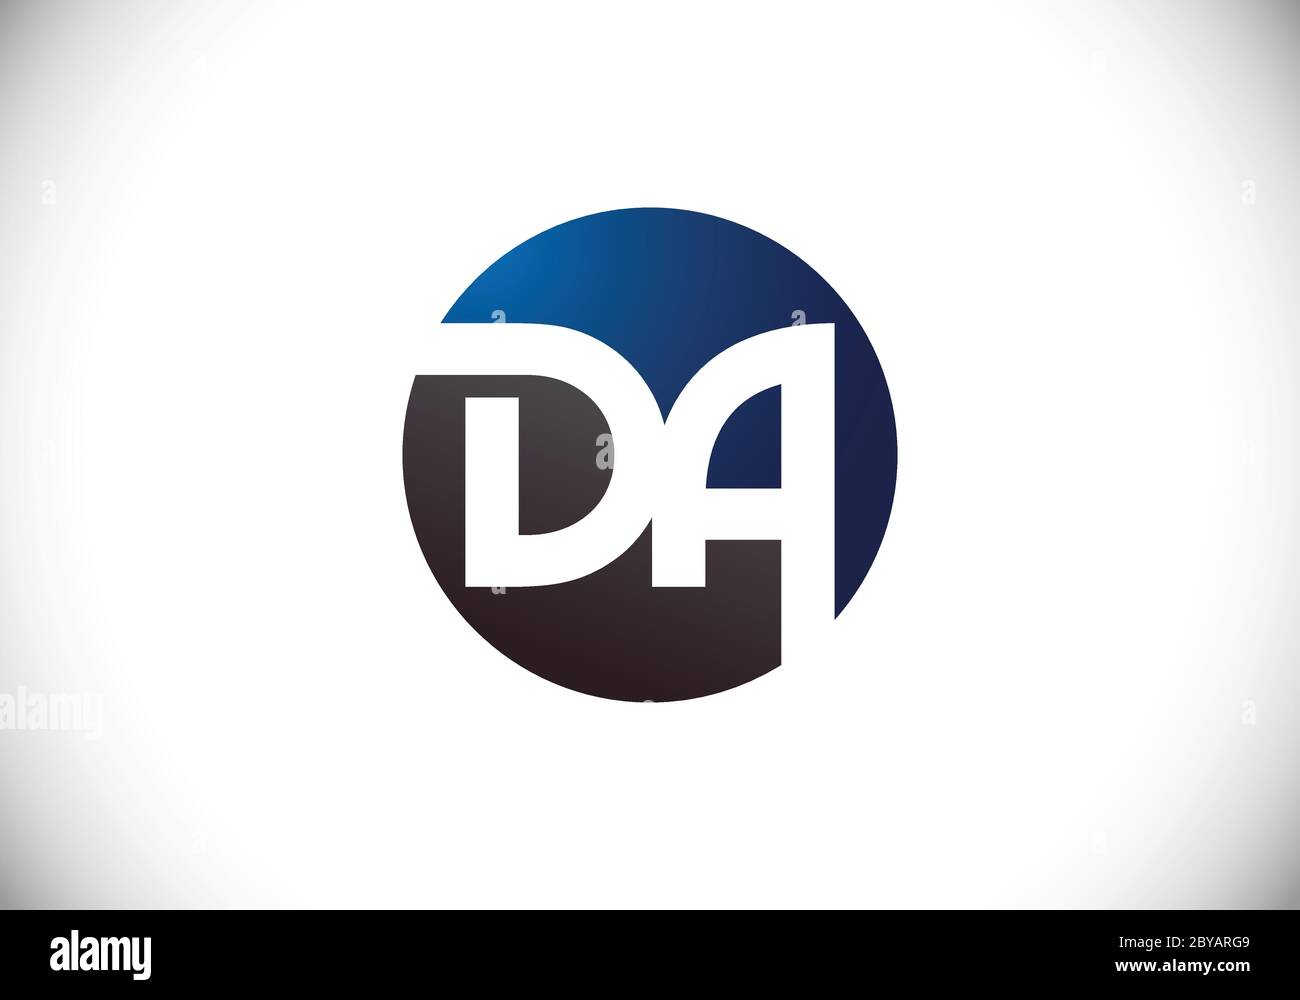 Initial Monogram Letter DA Logo Design Vector Template. DA Letter Logo Design Stock Vector